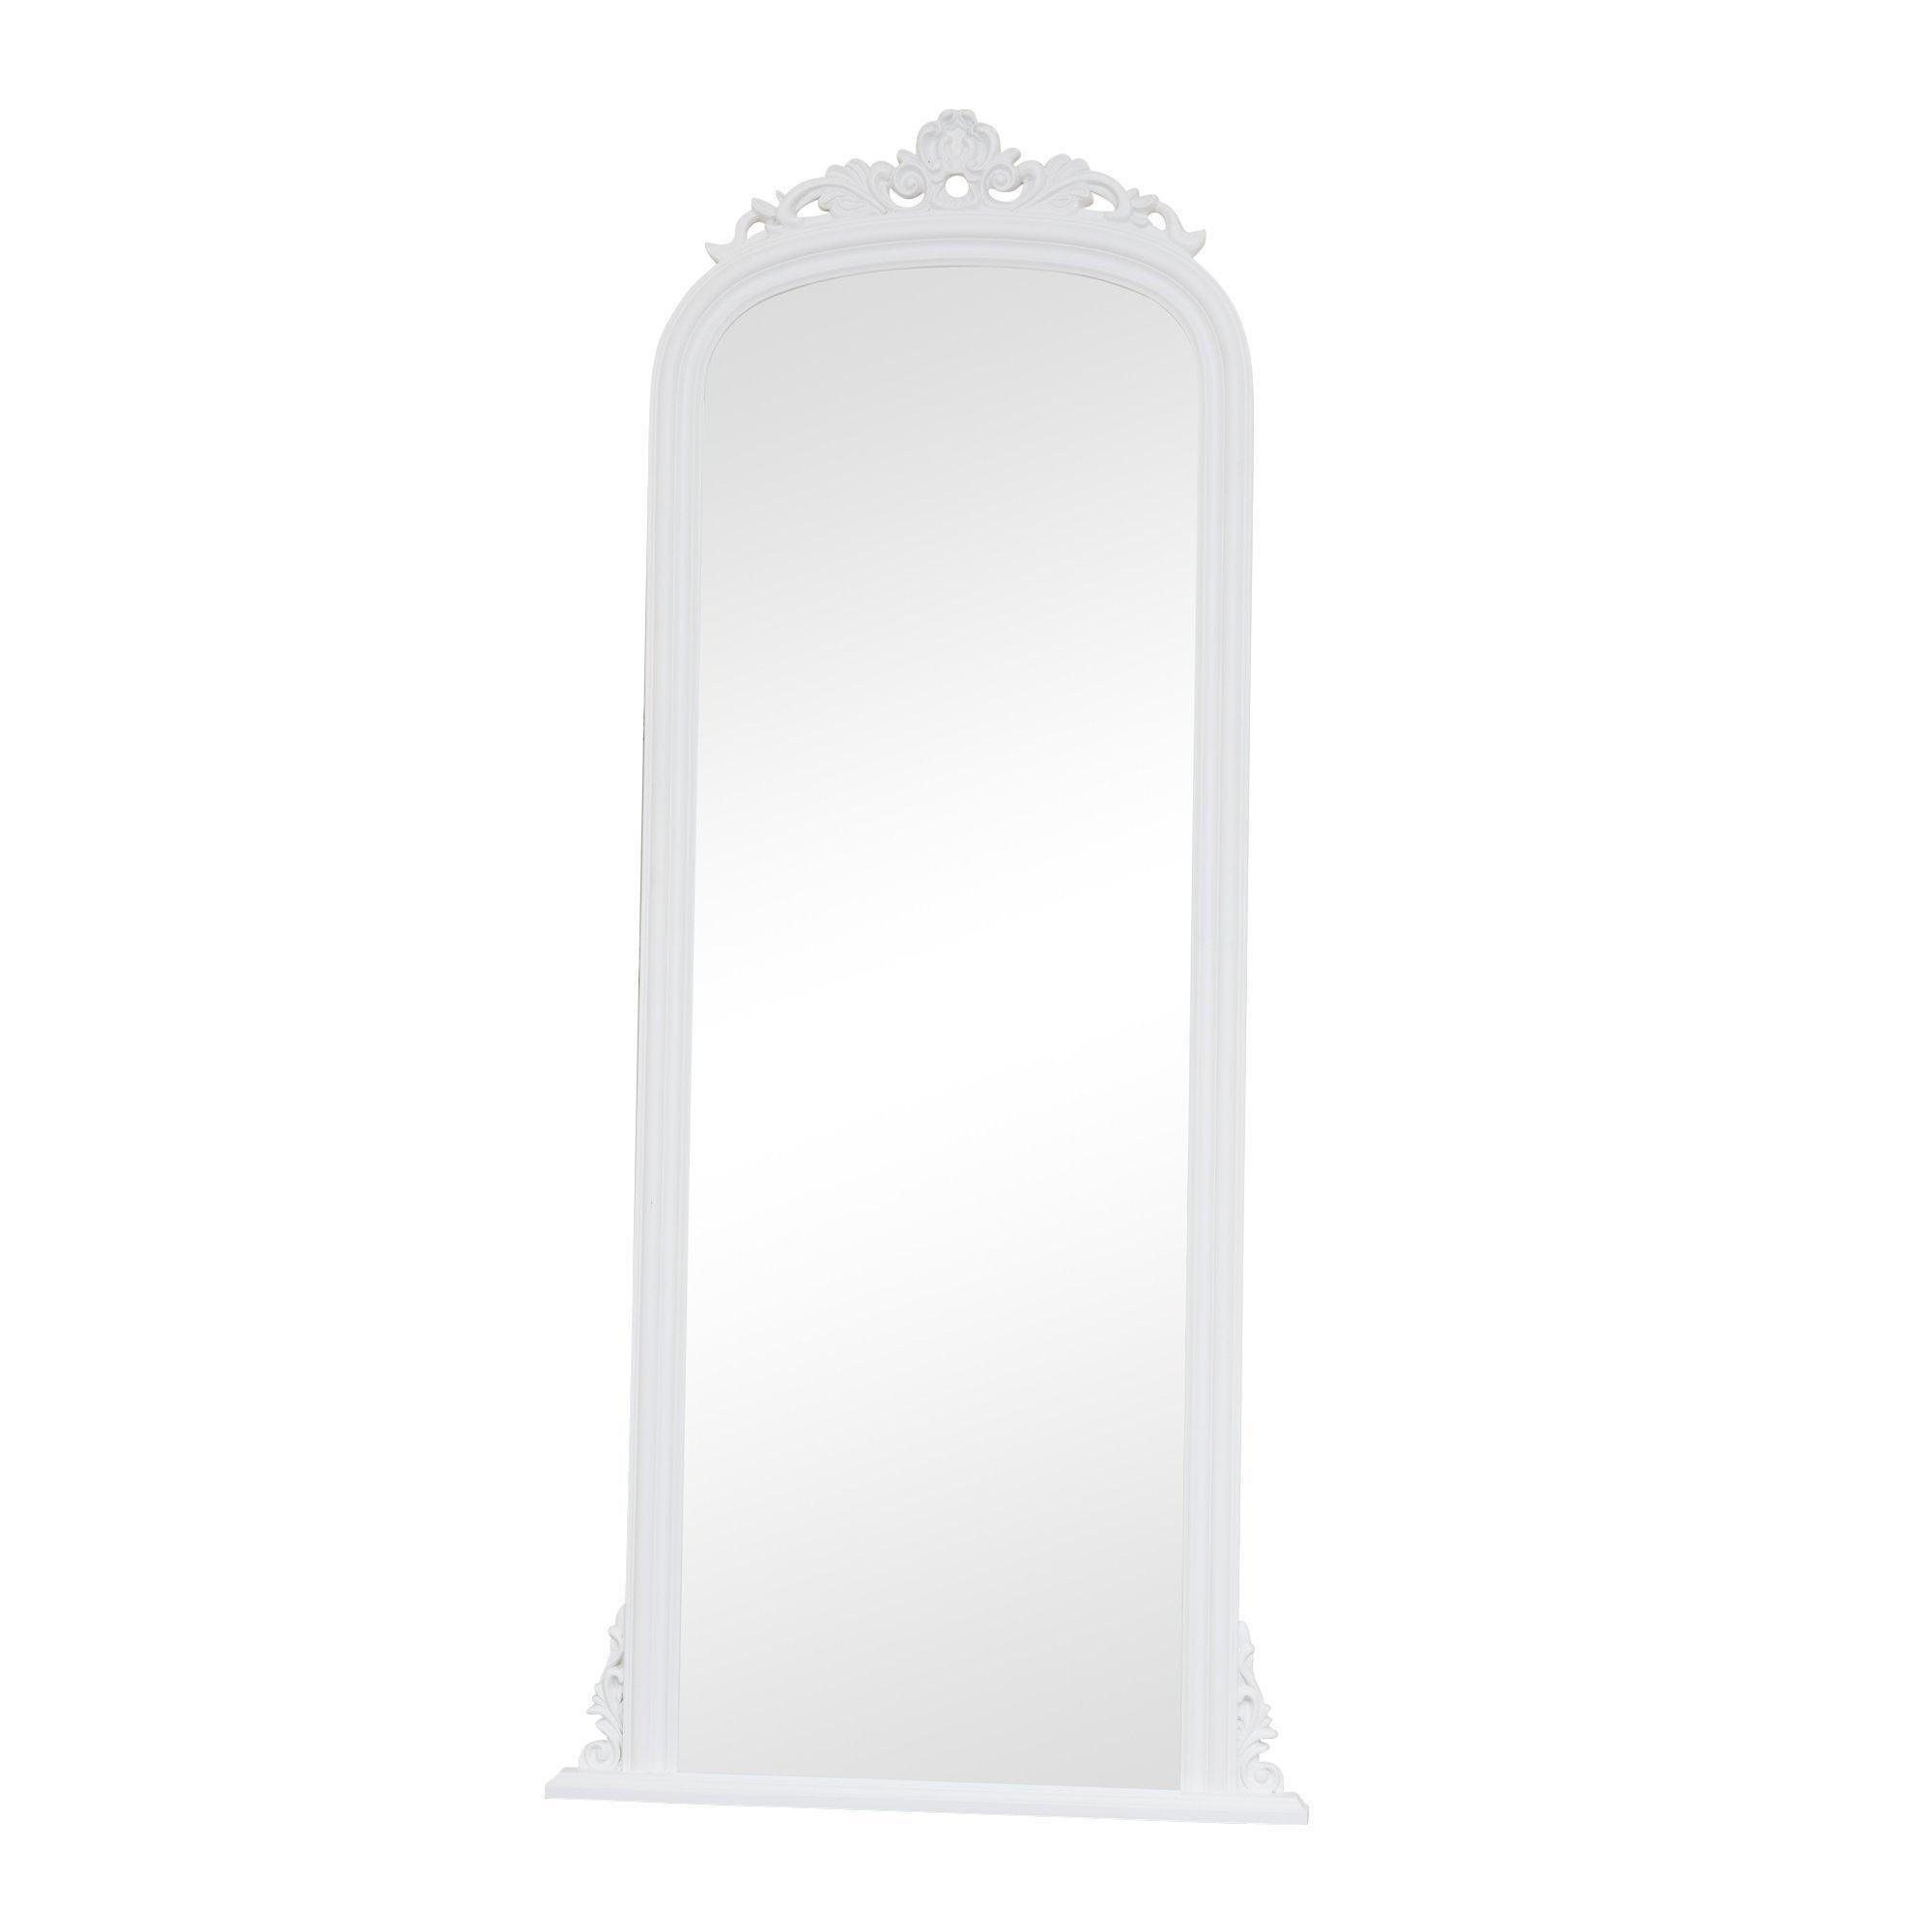 Tall White Ornate Vintage Wall / Leaner Mirror 80cm X 180cm - image 1